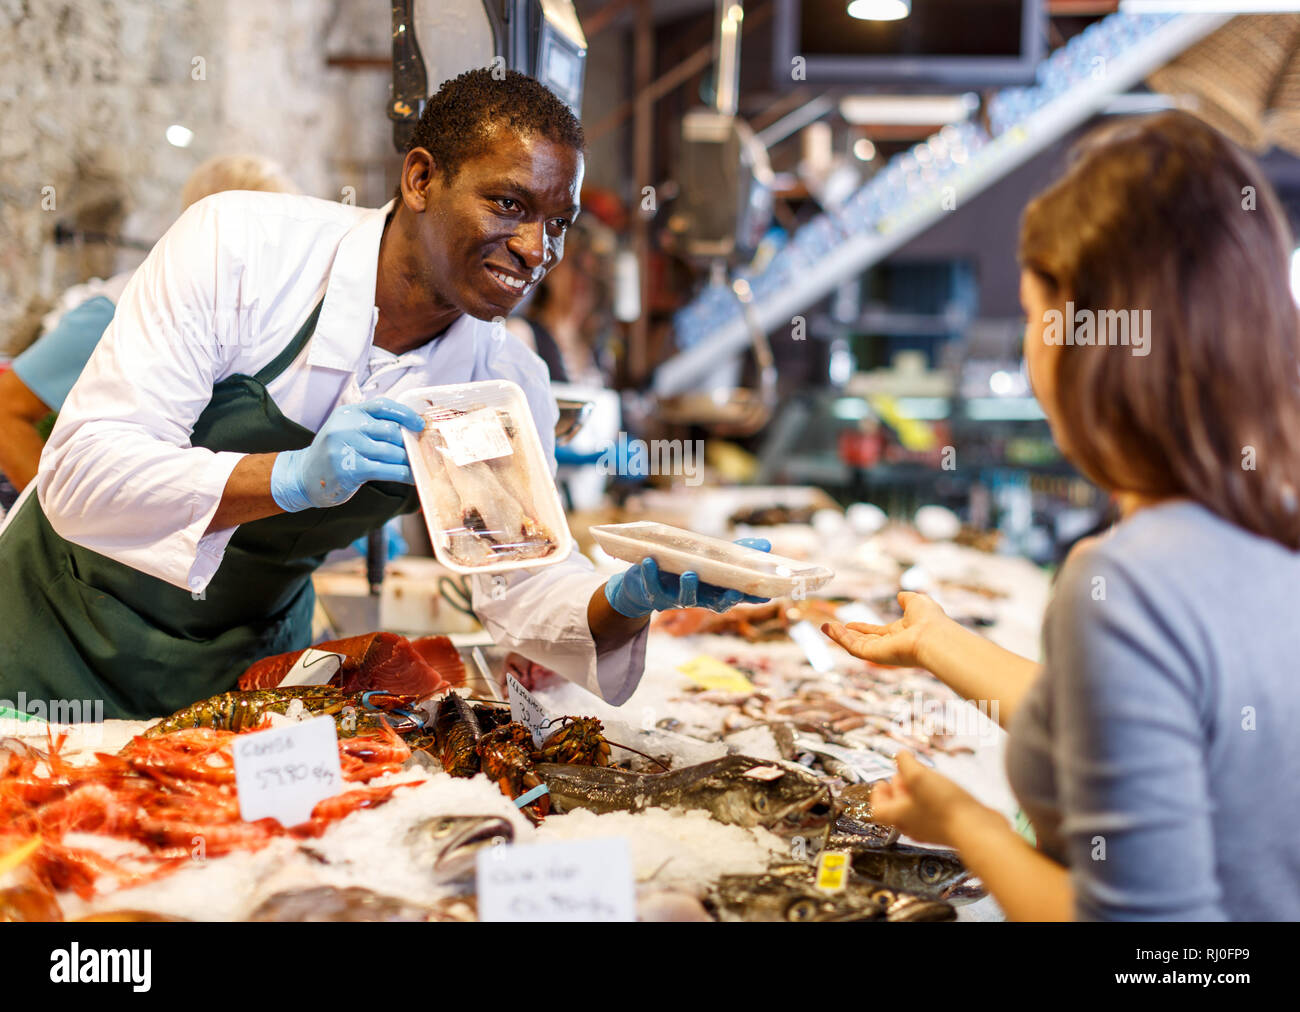 https://c8.alamy.com/comp/RJ0FP9/portrait-of-salesman-in-apron-offering-female-customer-fresh-fish-at-seafood-shop-RJ0FP9.jpg